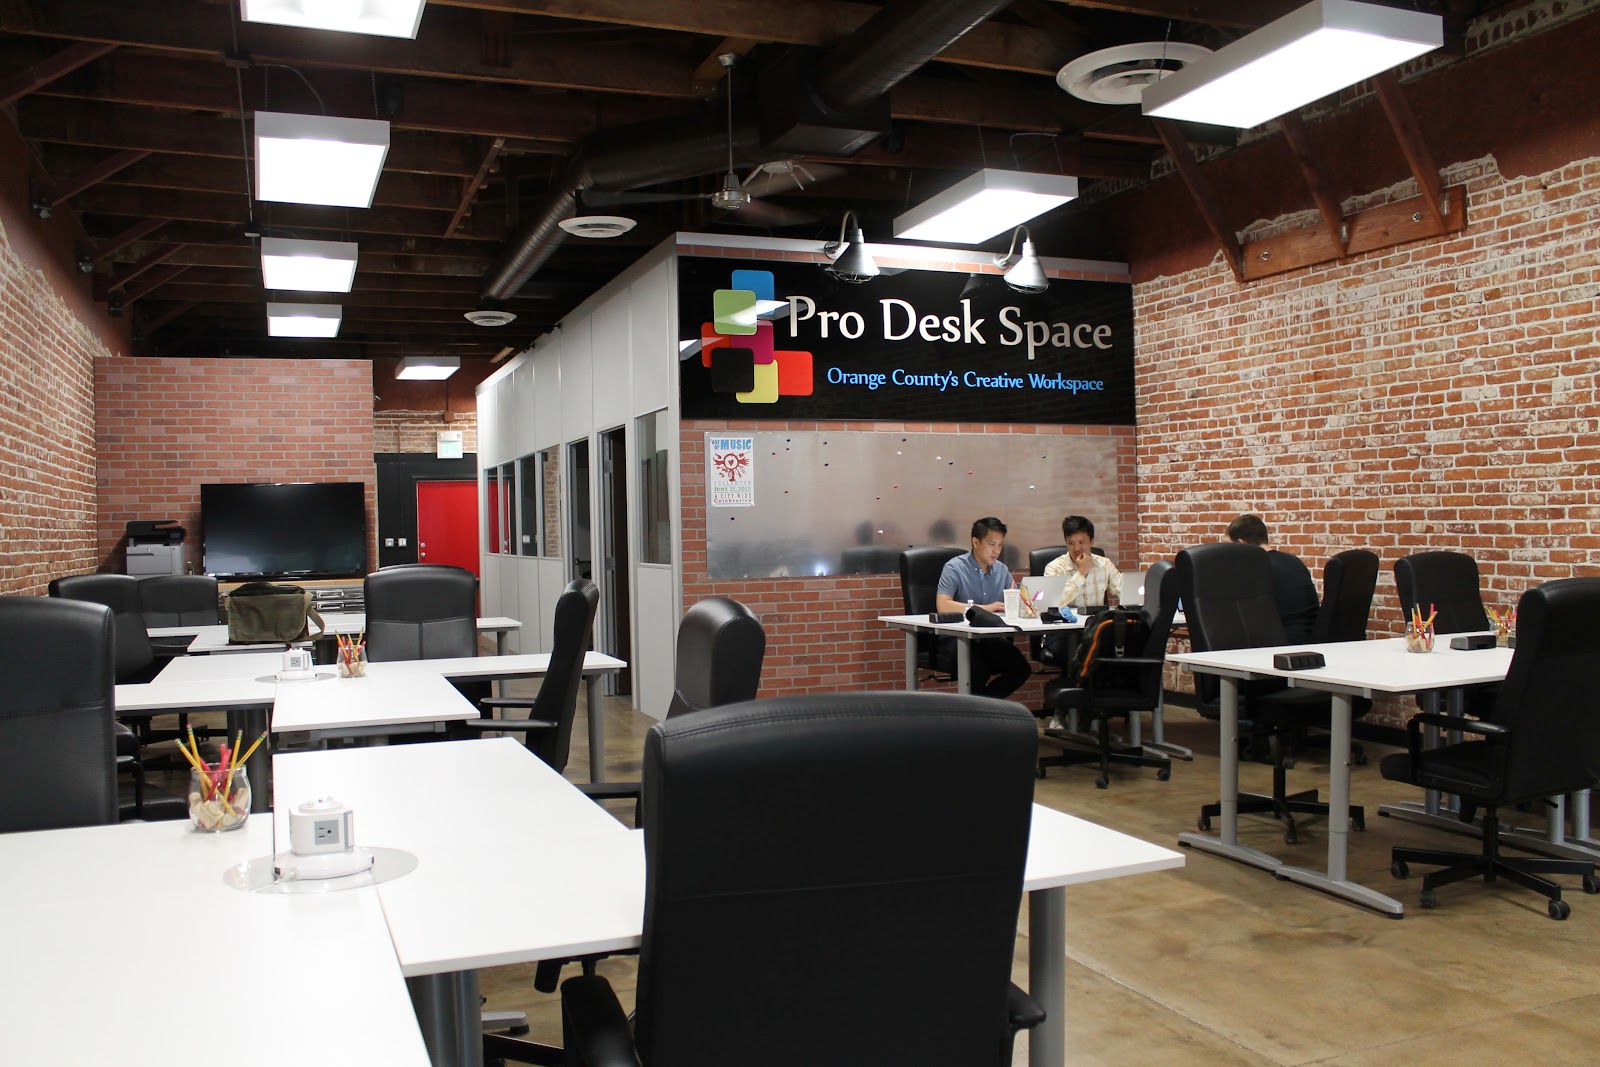 Pro Desk Space Coworking Space in Orange County California